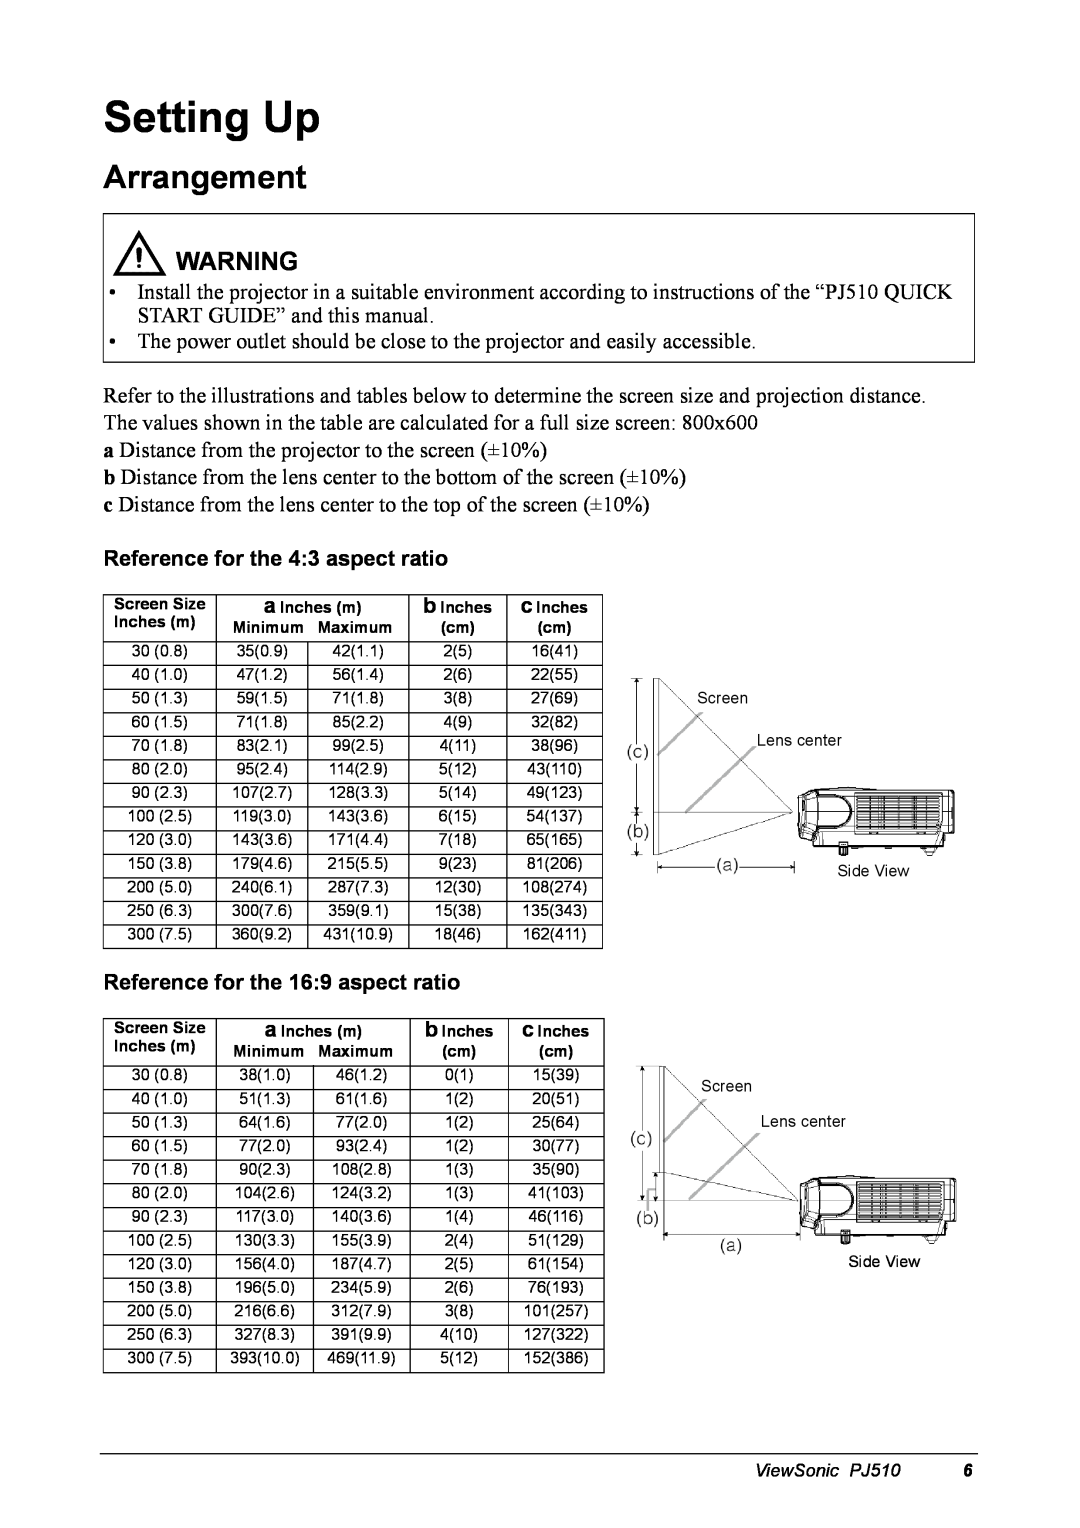 ViewSonic PJ510 manual Setting Up, Arrangement, Reference for the 43 aspect ratio, Reference for the 169 aspect ratio 